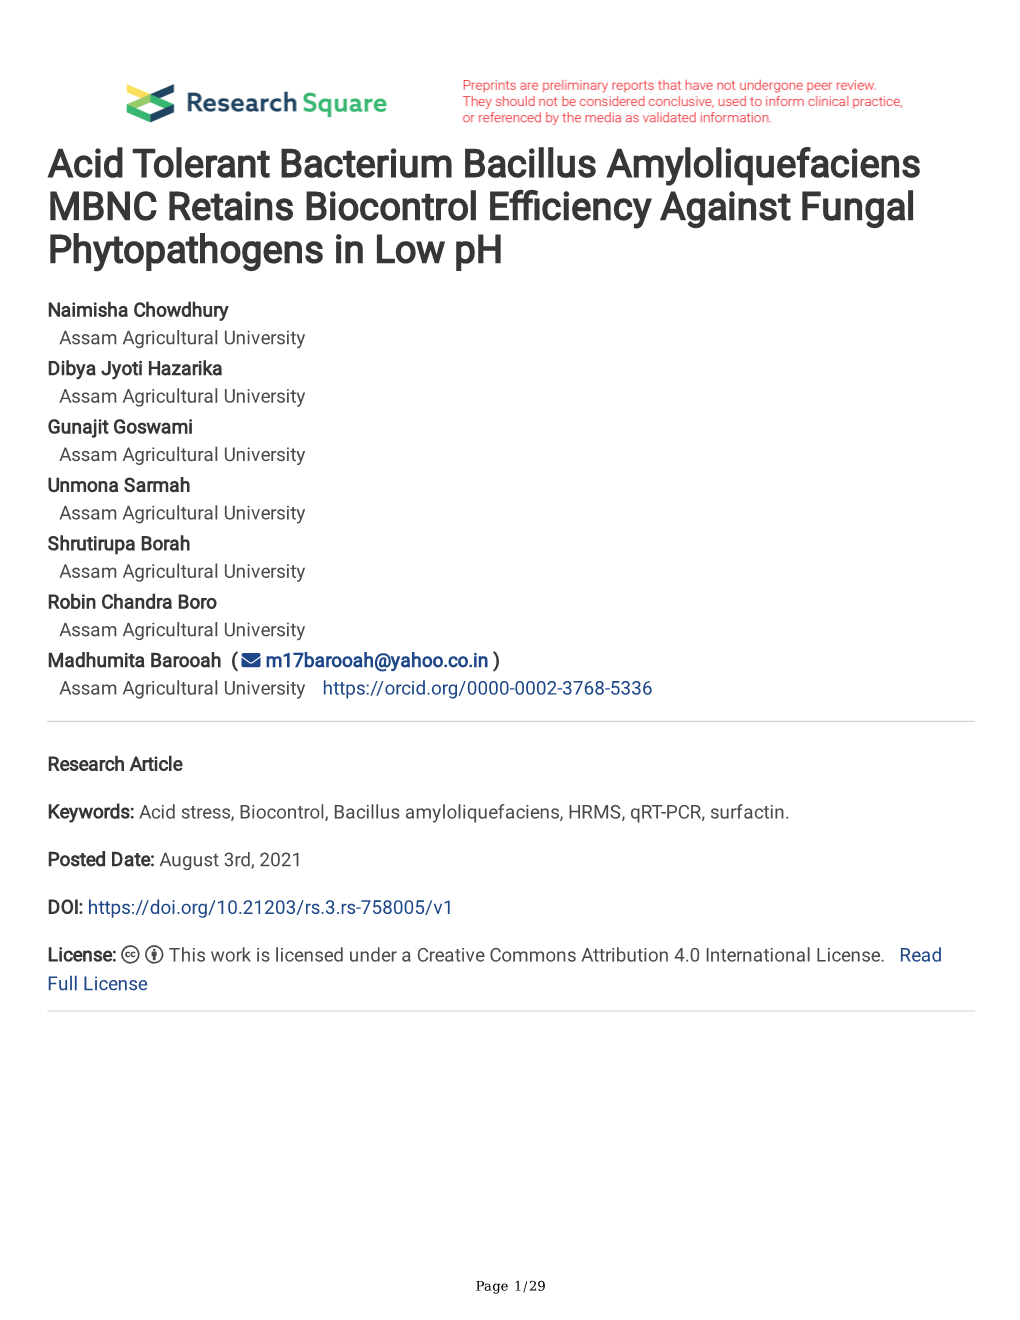 Acid Tolerant Bacterium Bacillus Amyloliquefaciens MBNC Retains Biocontrol Efciency Against Fungal Phytopathogens in Low Ph